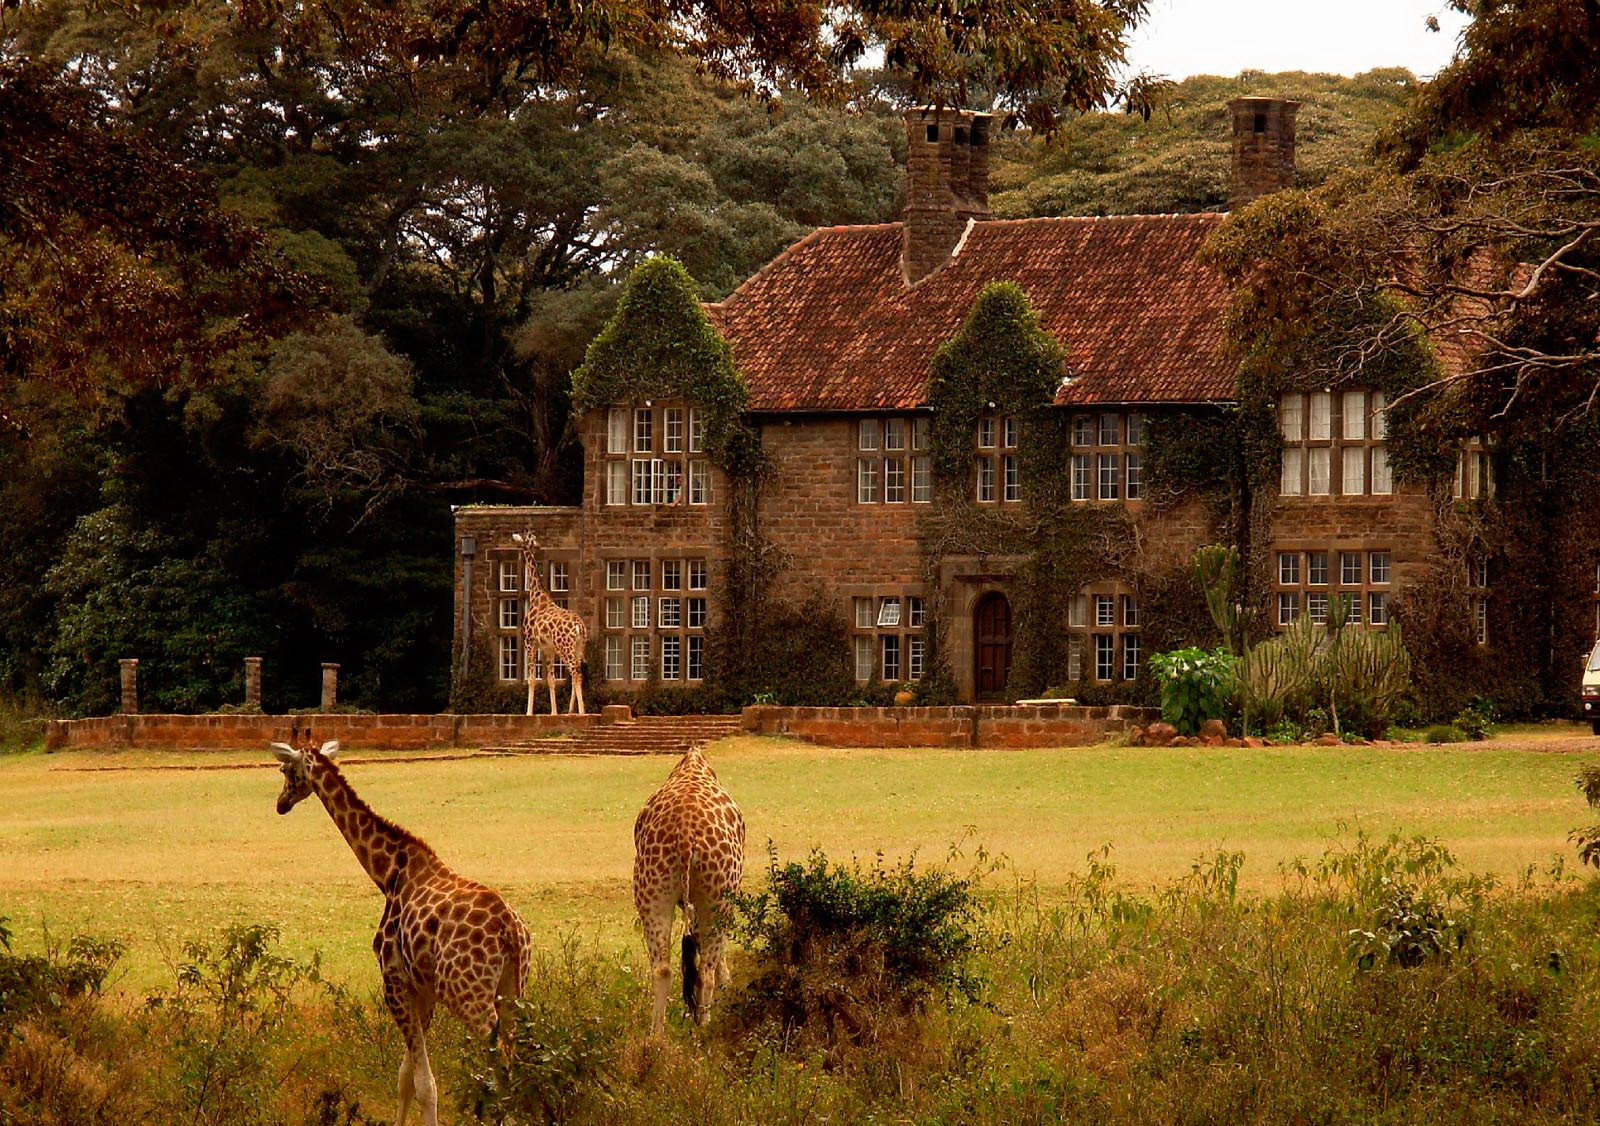 giraffe-centre-in-nairobi-kenya-by-phillip-black-2007.jpg